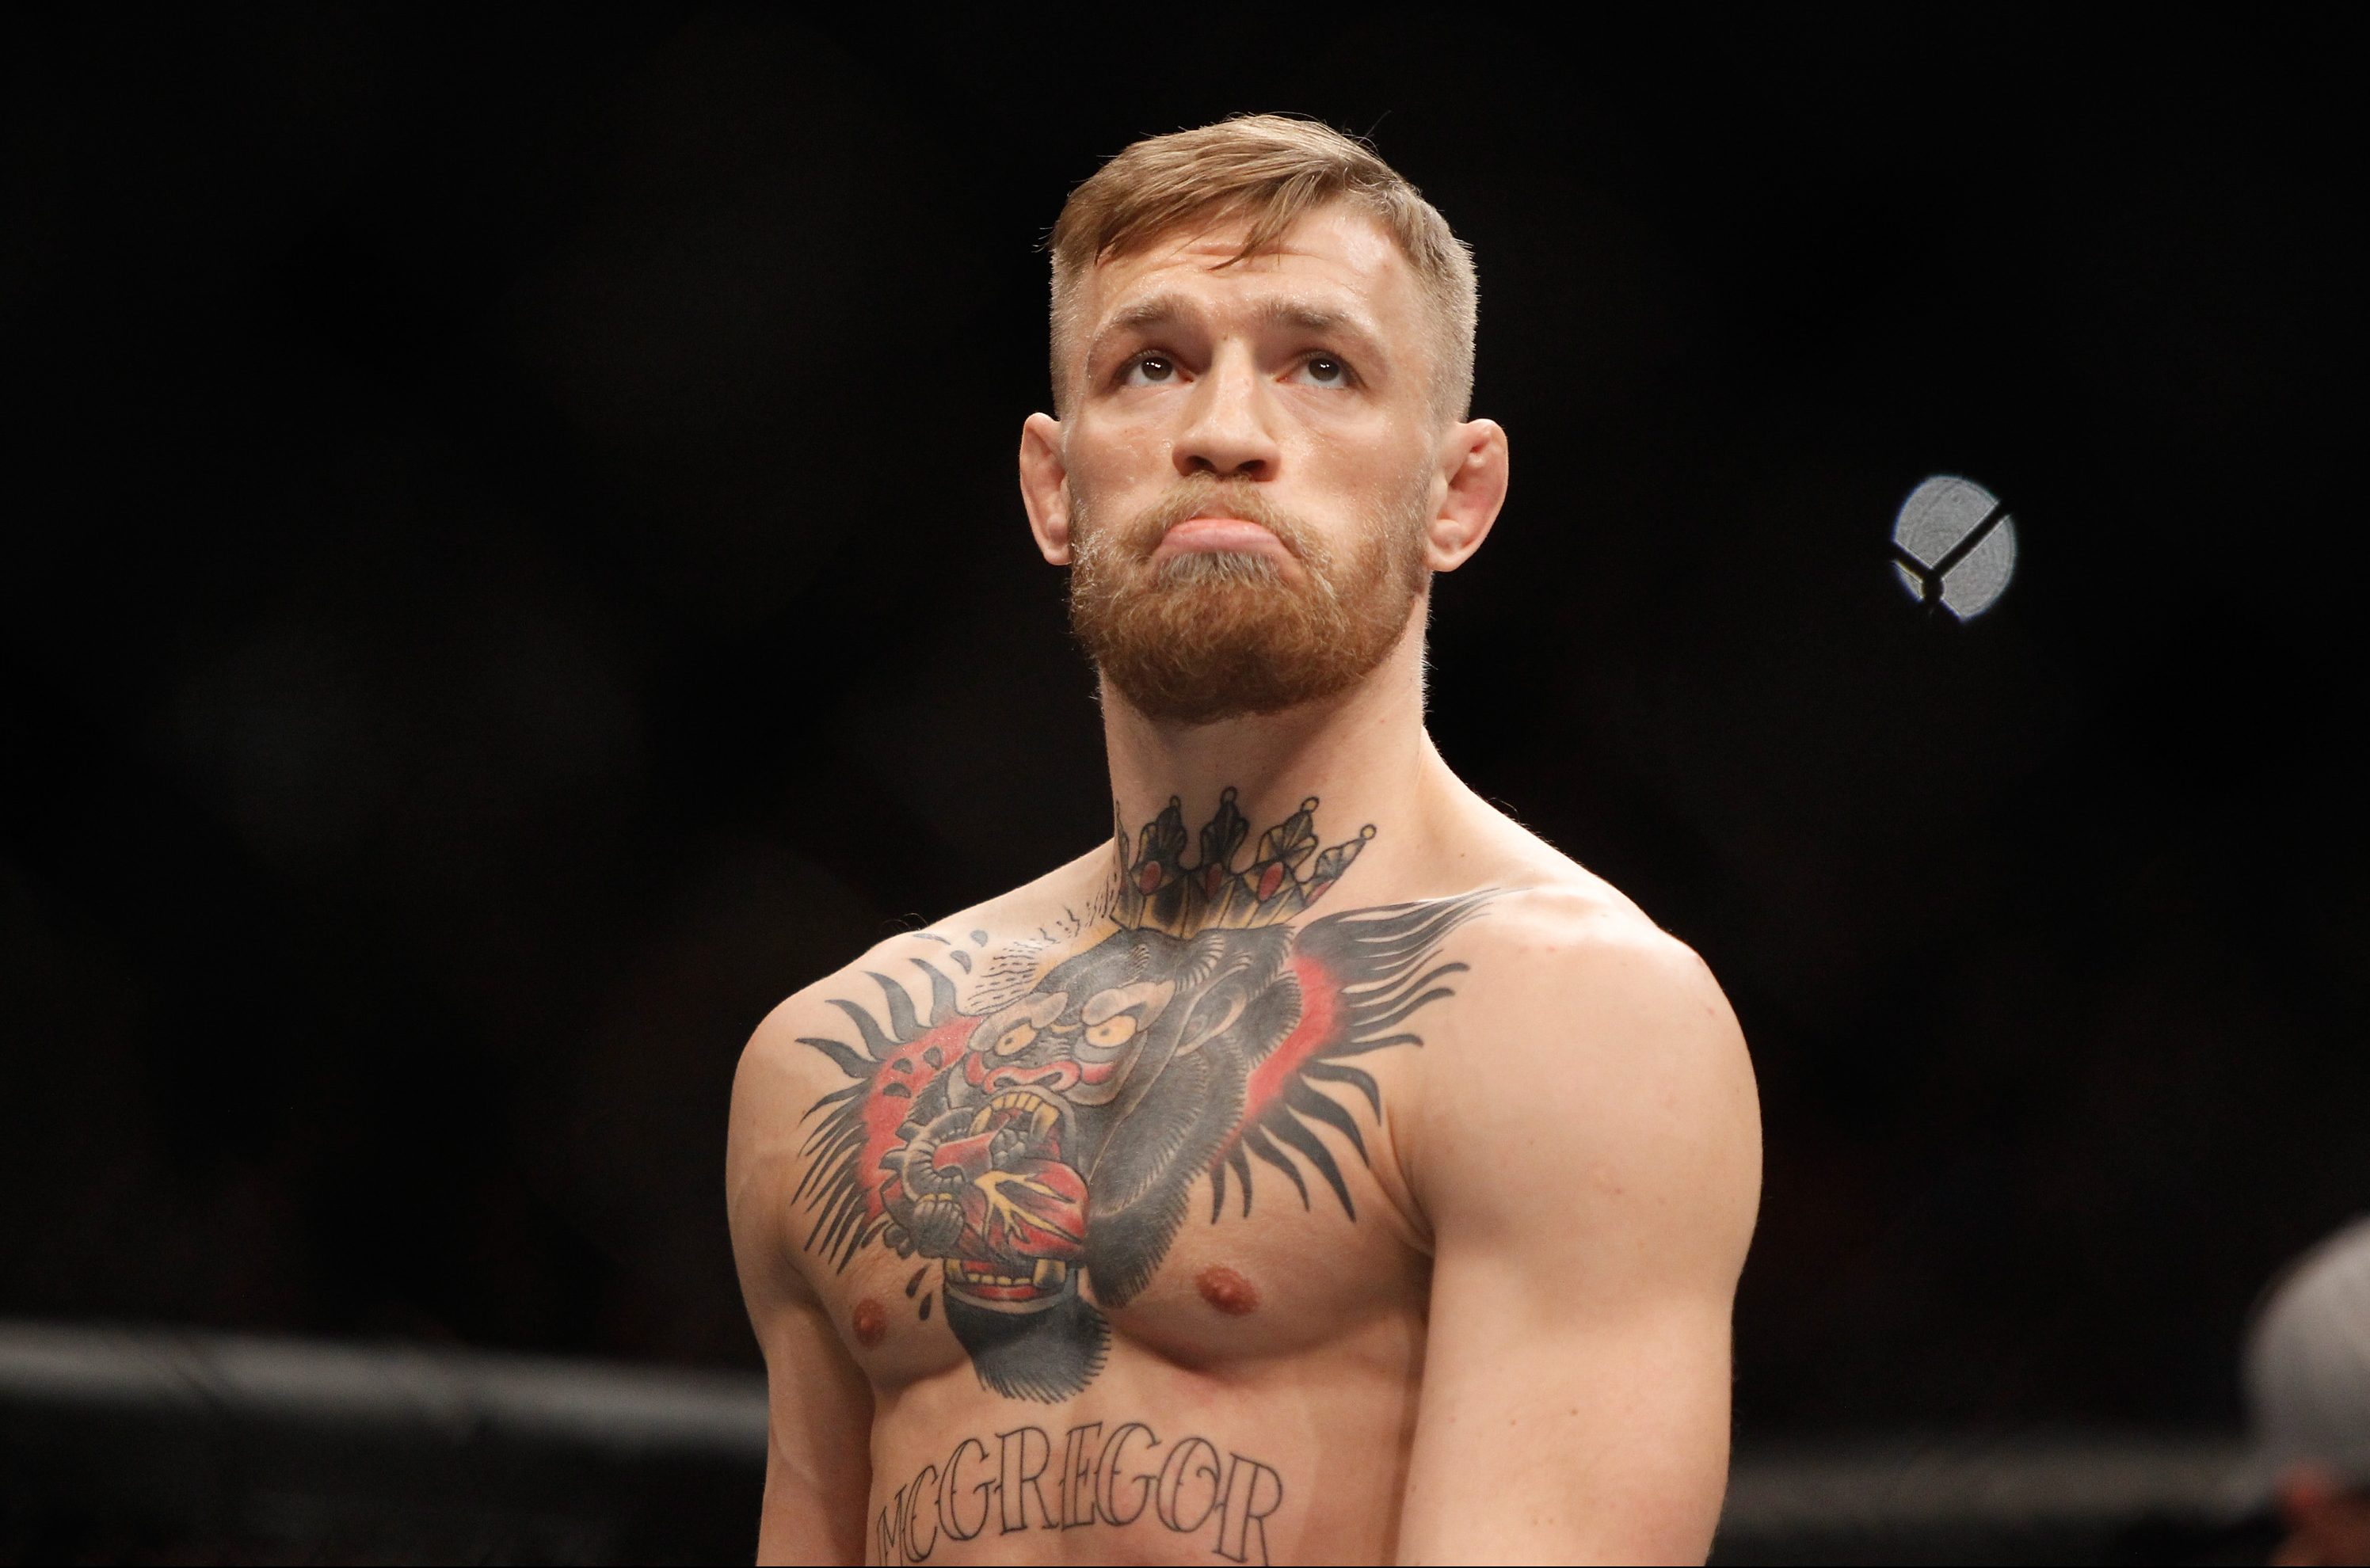 Conor McGregor wishes Donald Cerrone well ahead of UFC 246